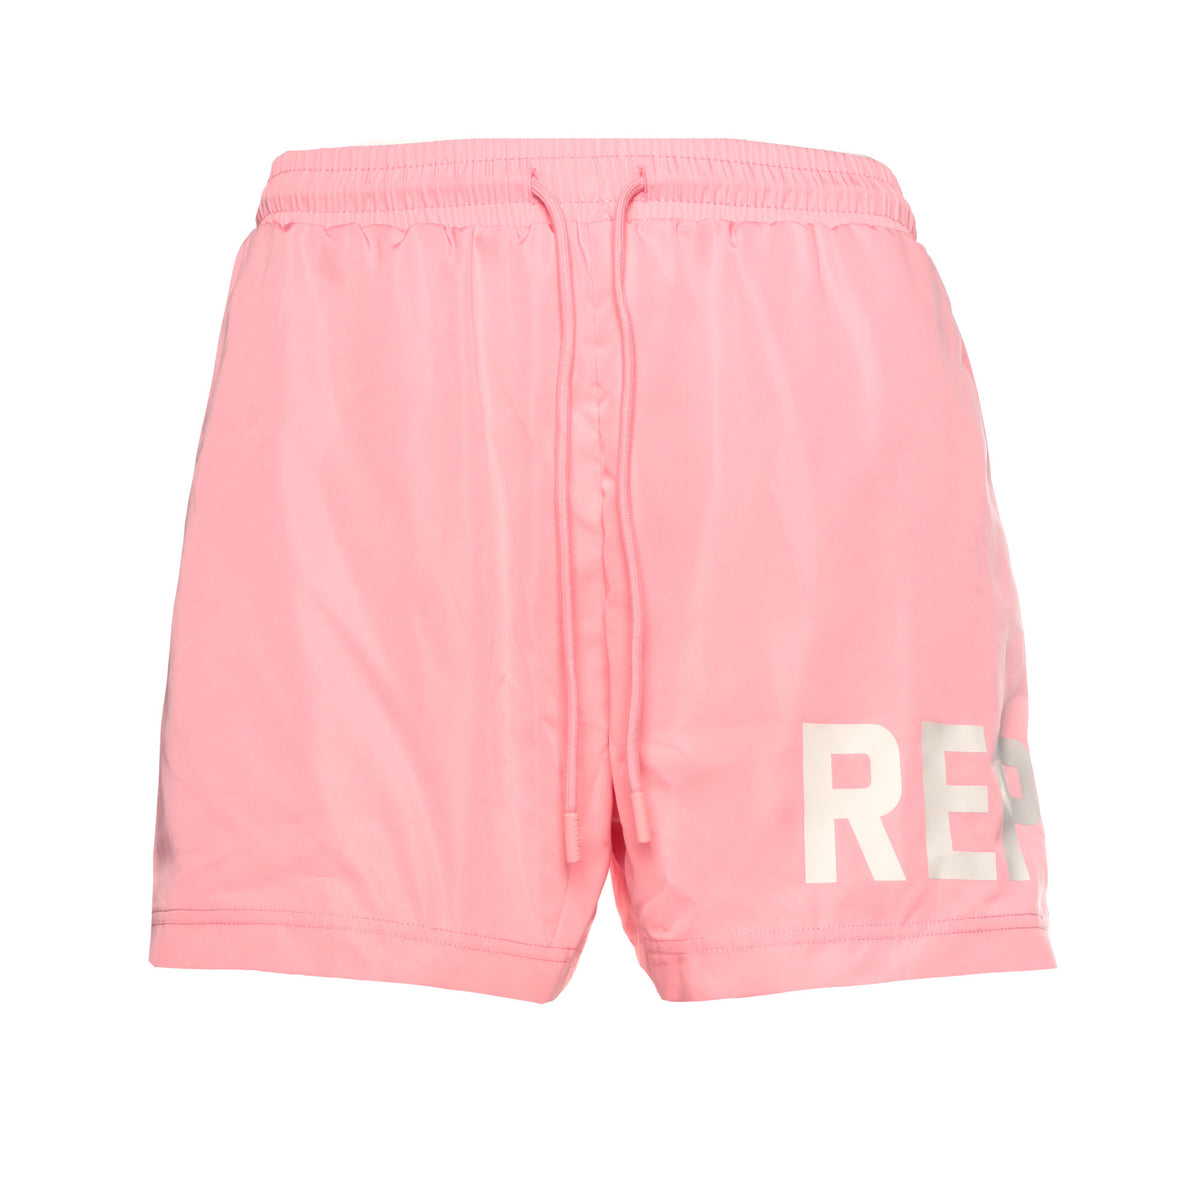 Represent Clo. Logo Pink Swim Shorts - SIZE Boutique